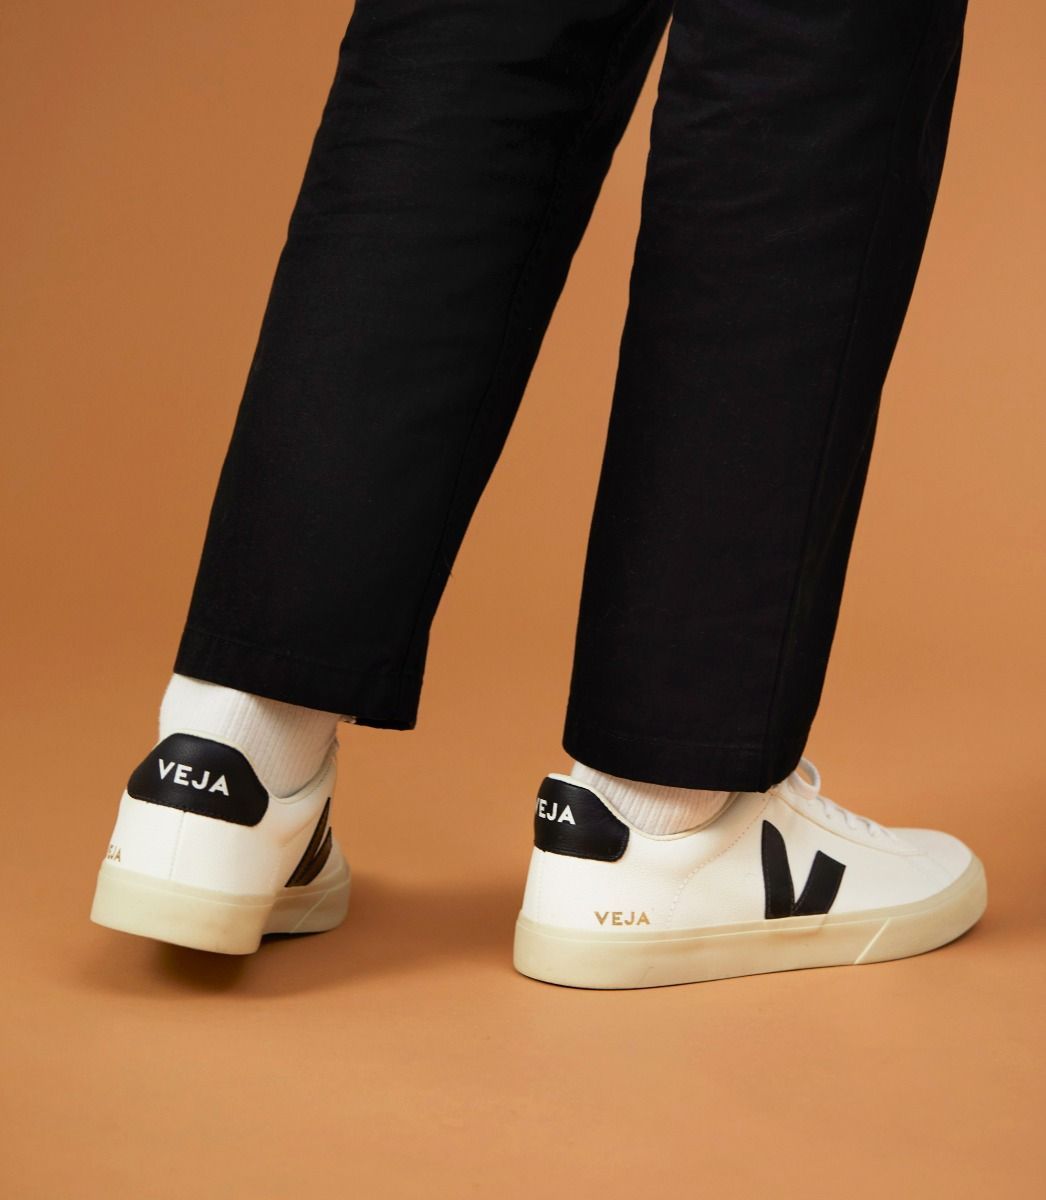 Men's Campo Chromfree Leather Shoes White/Black 